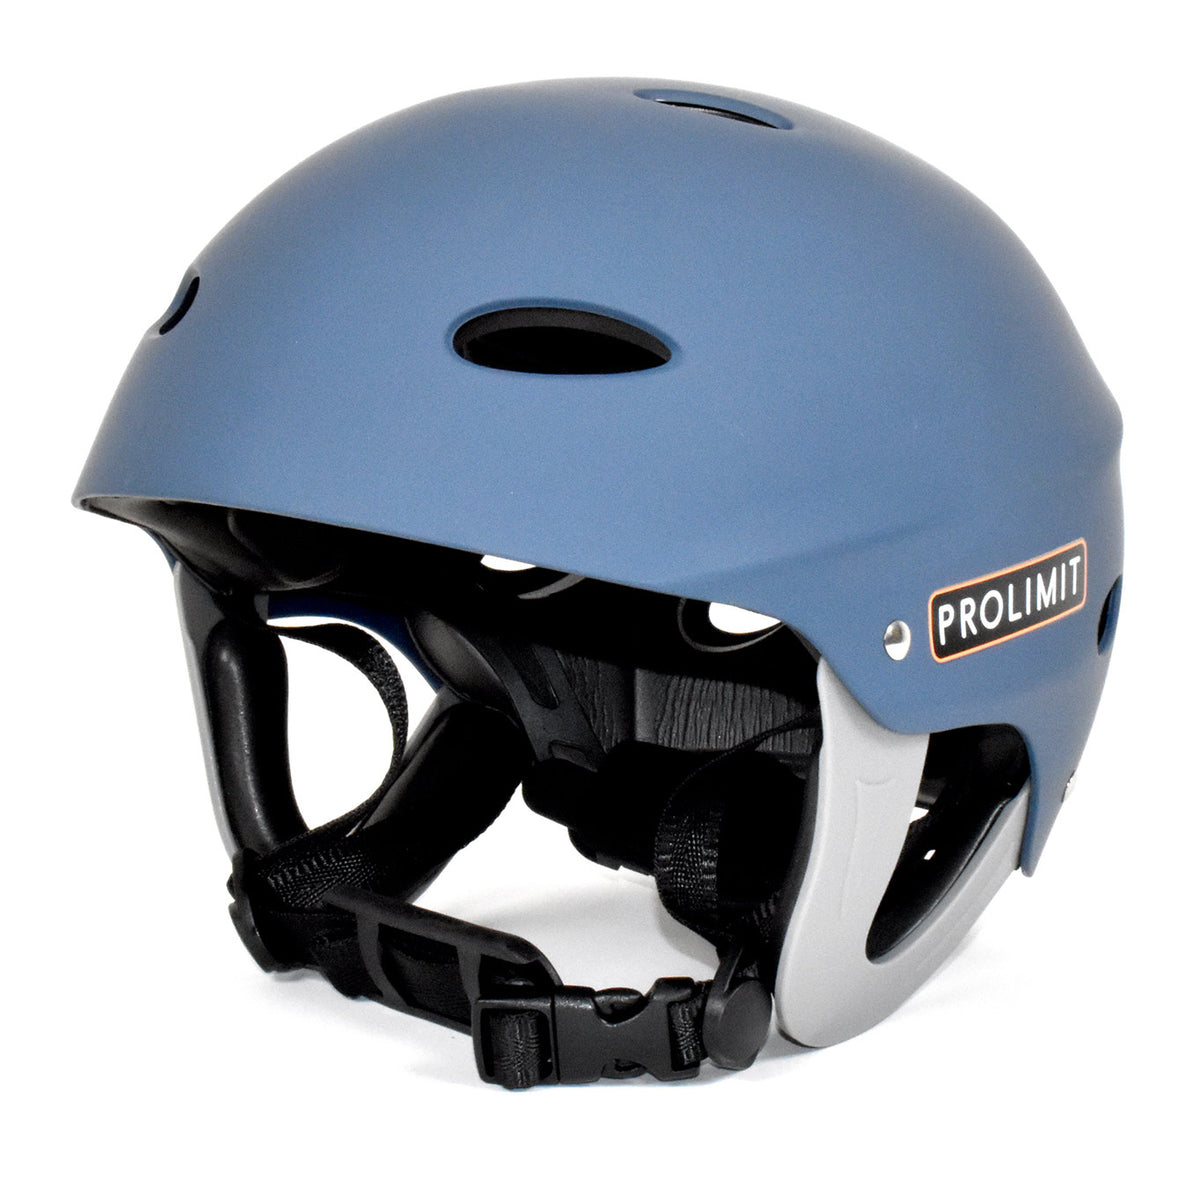 PROLIMIT WATERSPORT HELMET MATTE/NAVY water sports helmet